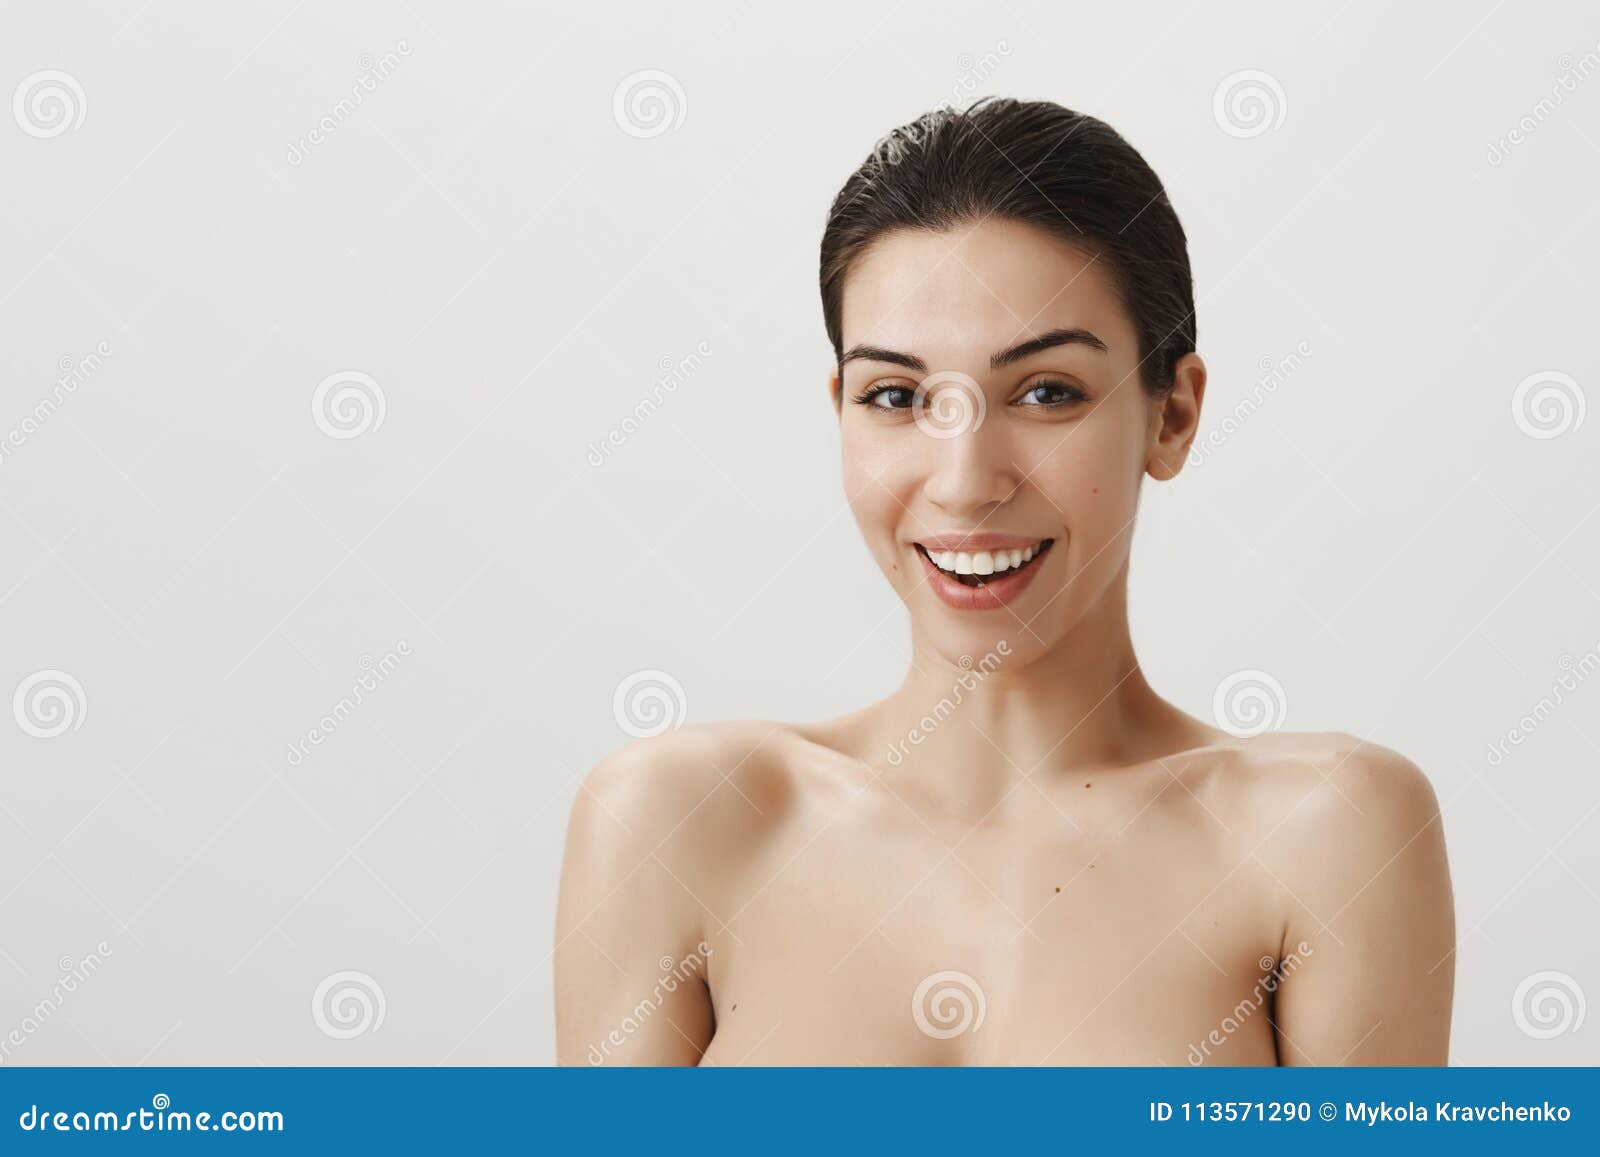 Girl gets caught showering naked